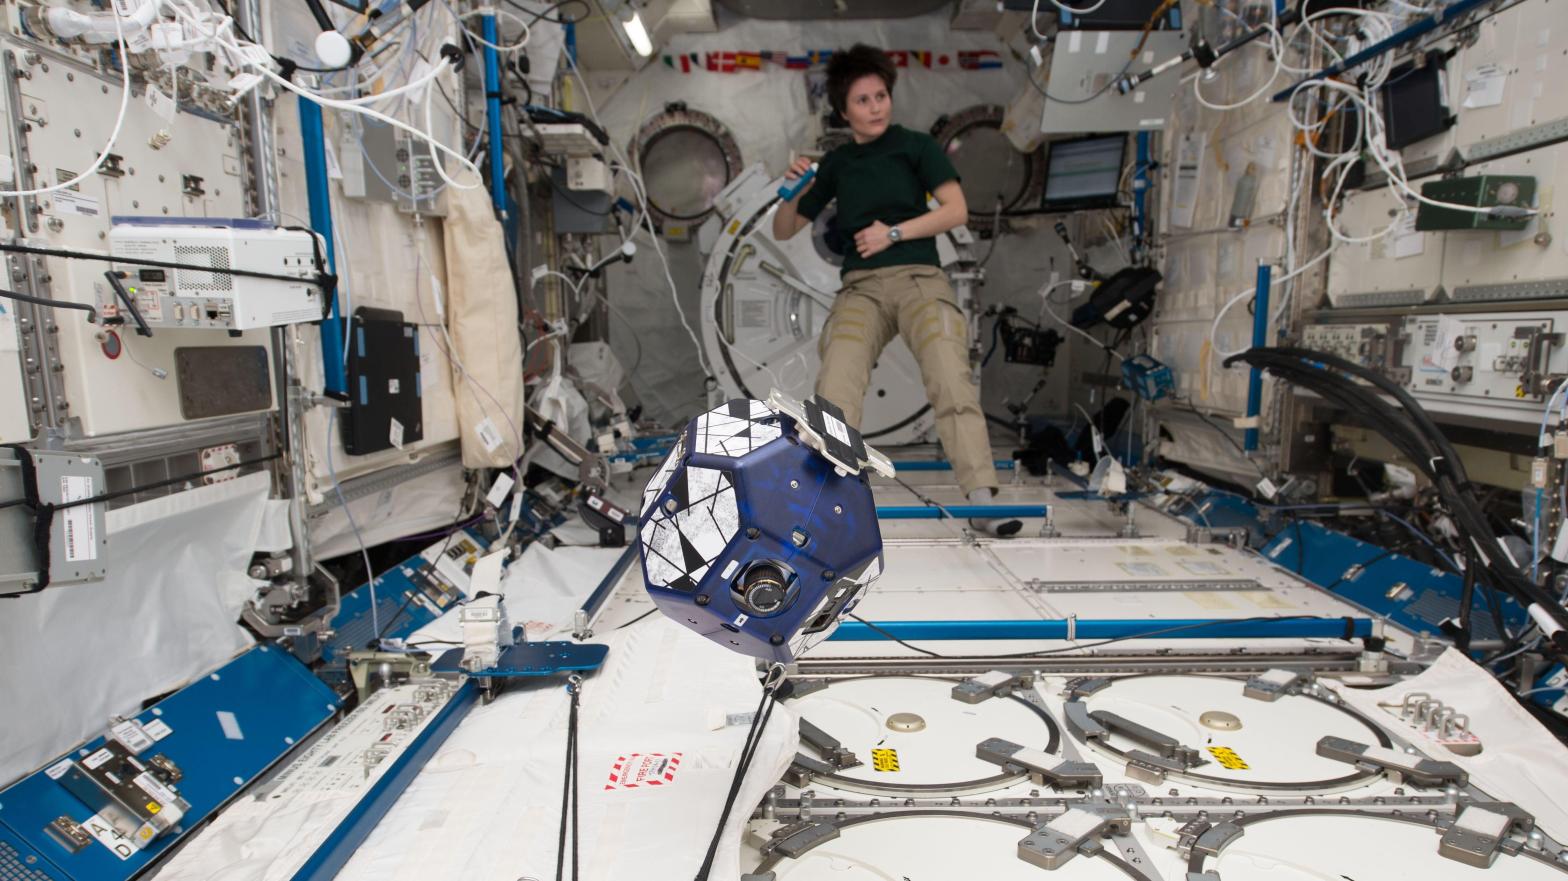 Crew-4 member and ESA astronaut Samantha Cristoforetti is no stranger to the ISS. (Photo: NASA)